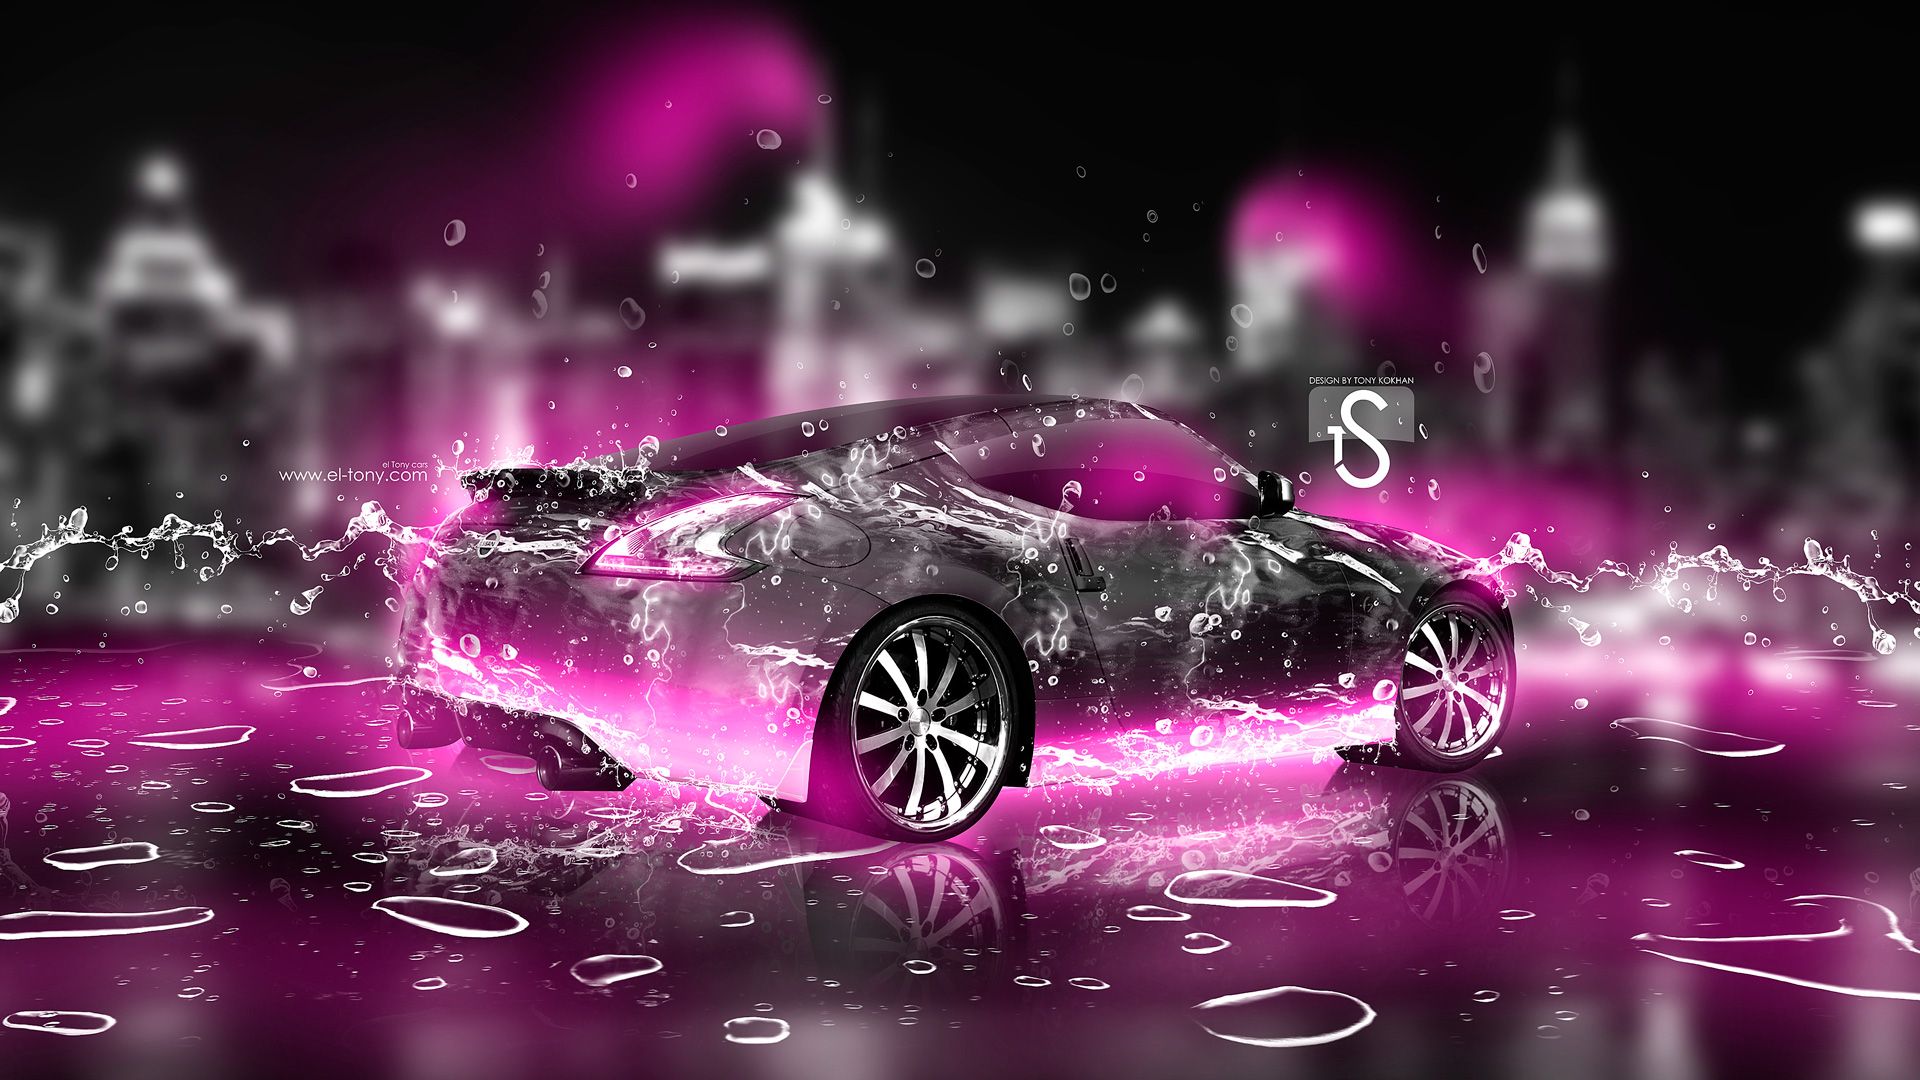 Free download Neon Pink Wallpaper water city car 2013 pink